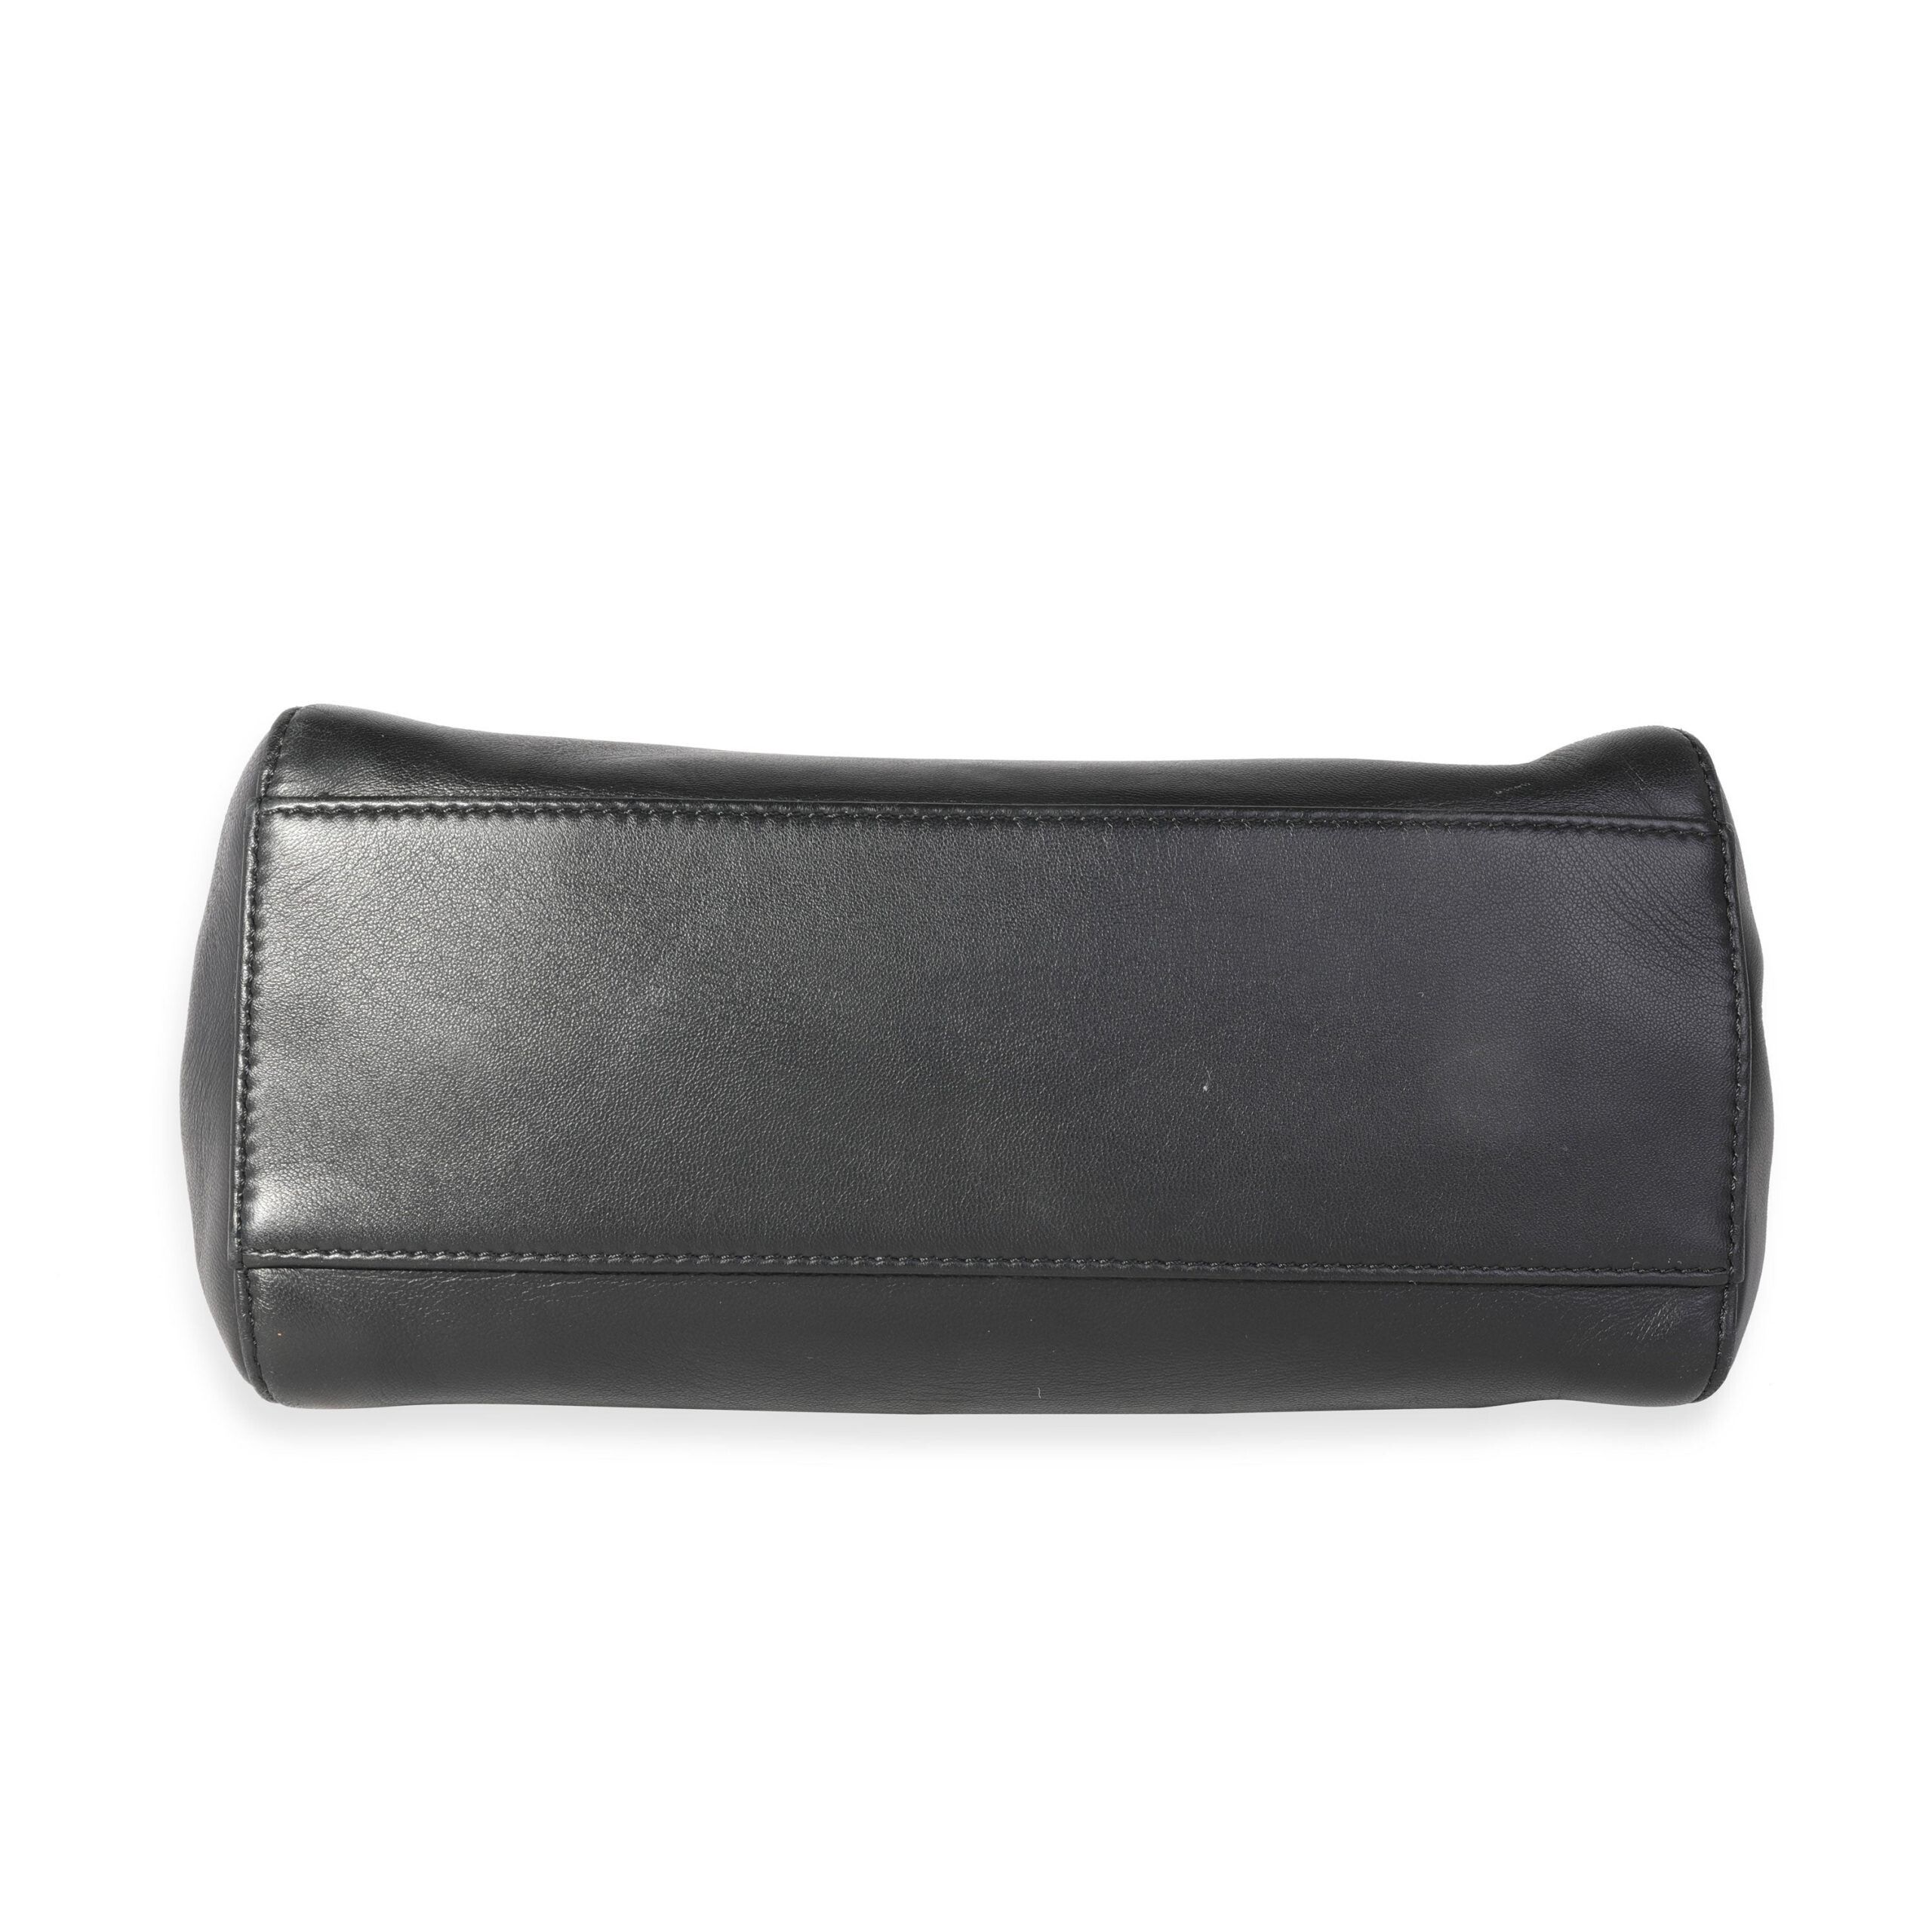 Fendi Fendi Black Nappa Leather Iconic Mini Peekaboo Bag Size ONE SIZE - 4 Thumbnail